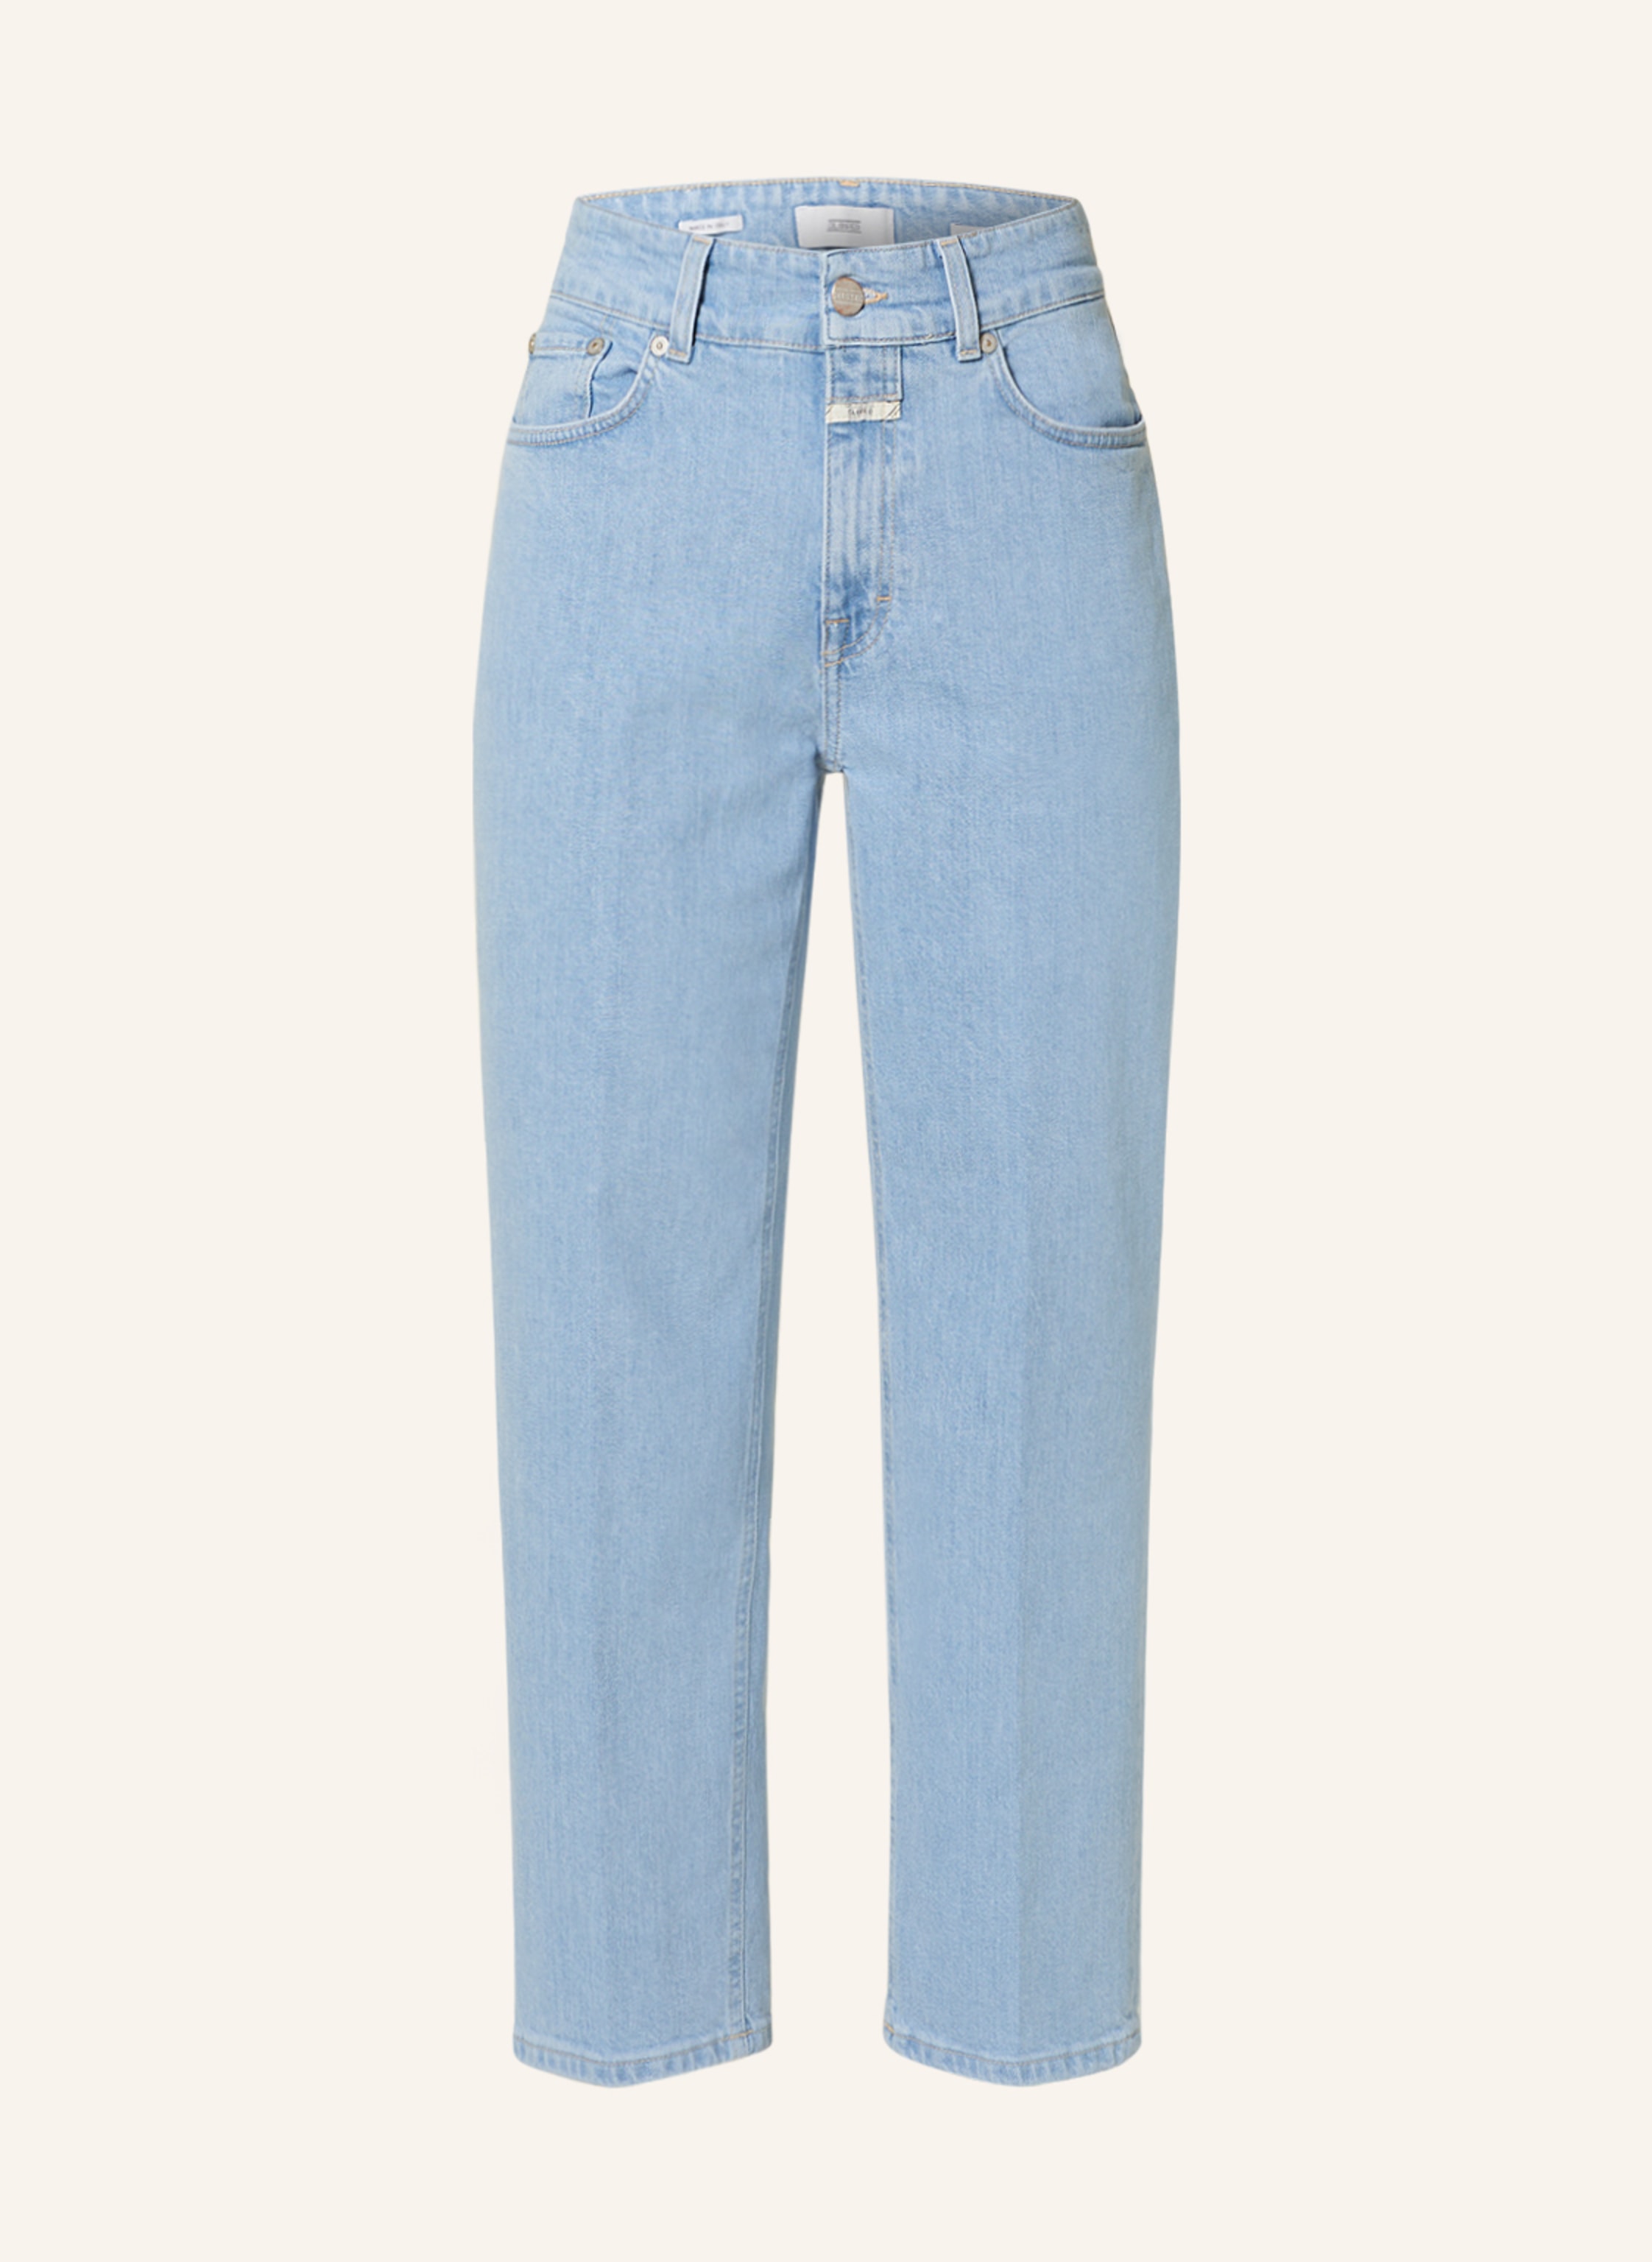 CLOSED 7/8 jeans MILO in lbl light blue | Breuninger